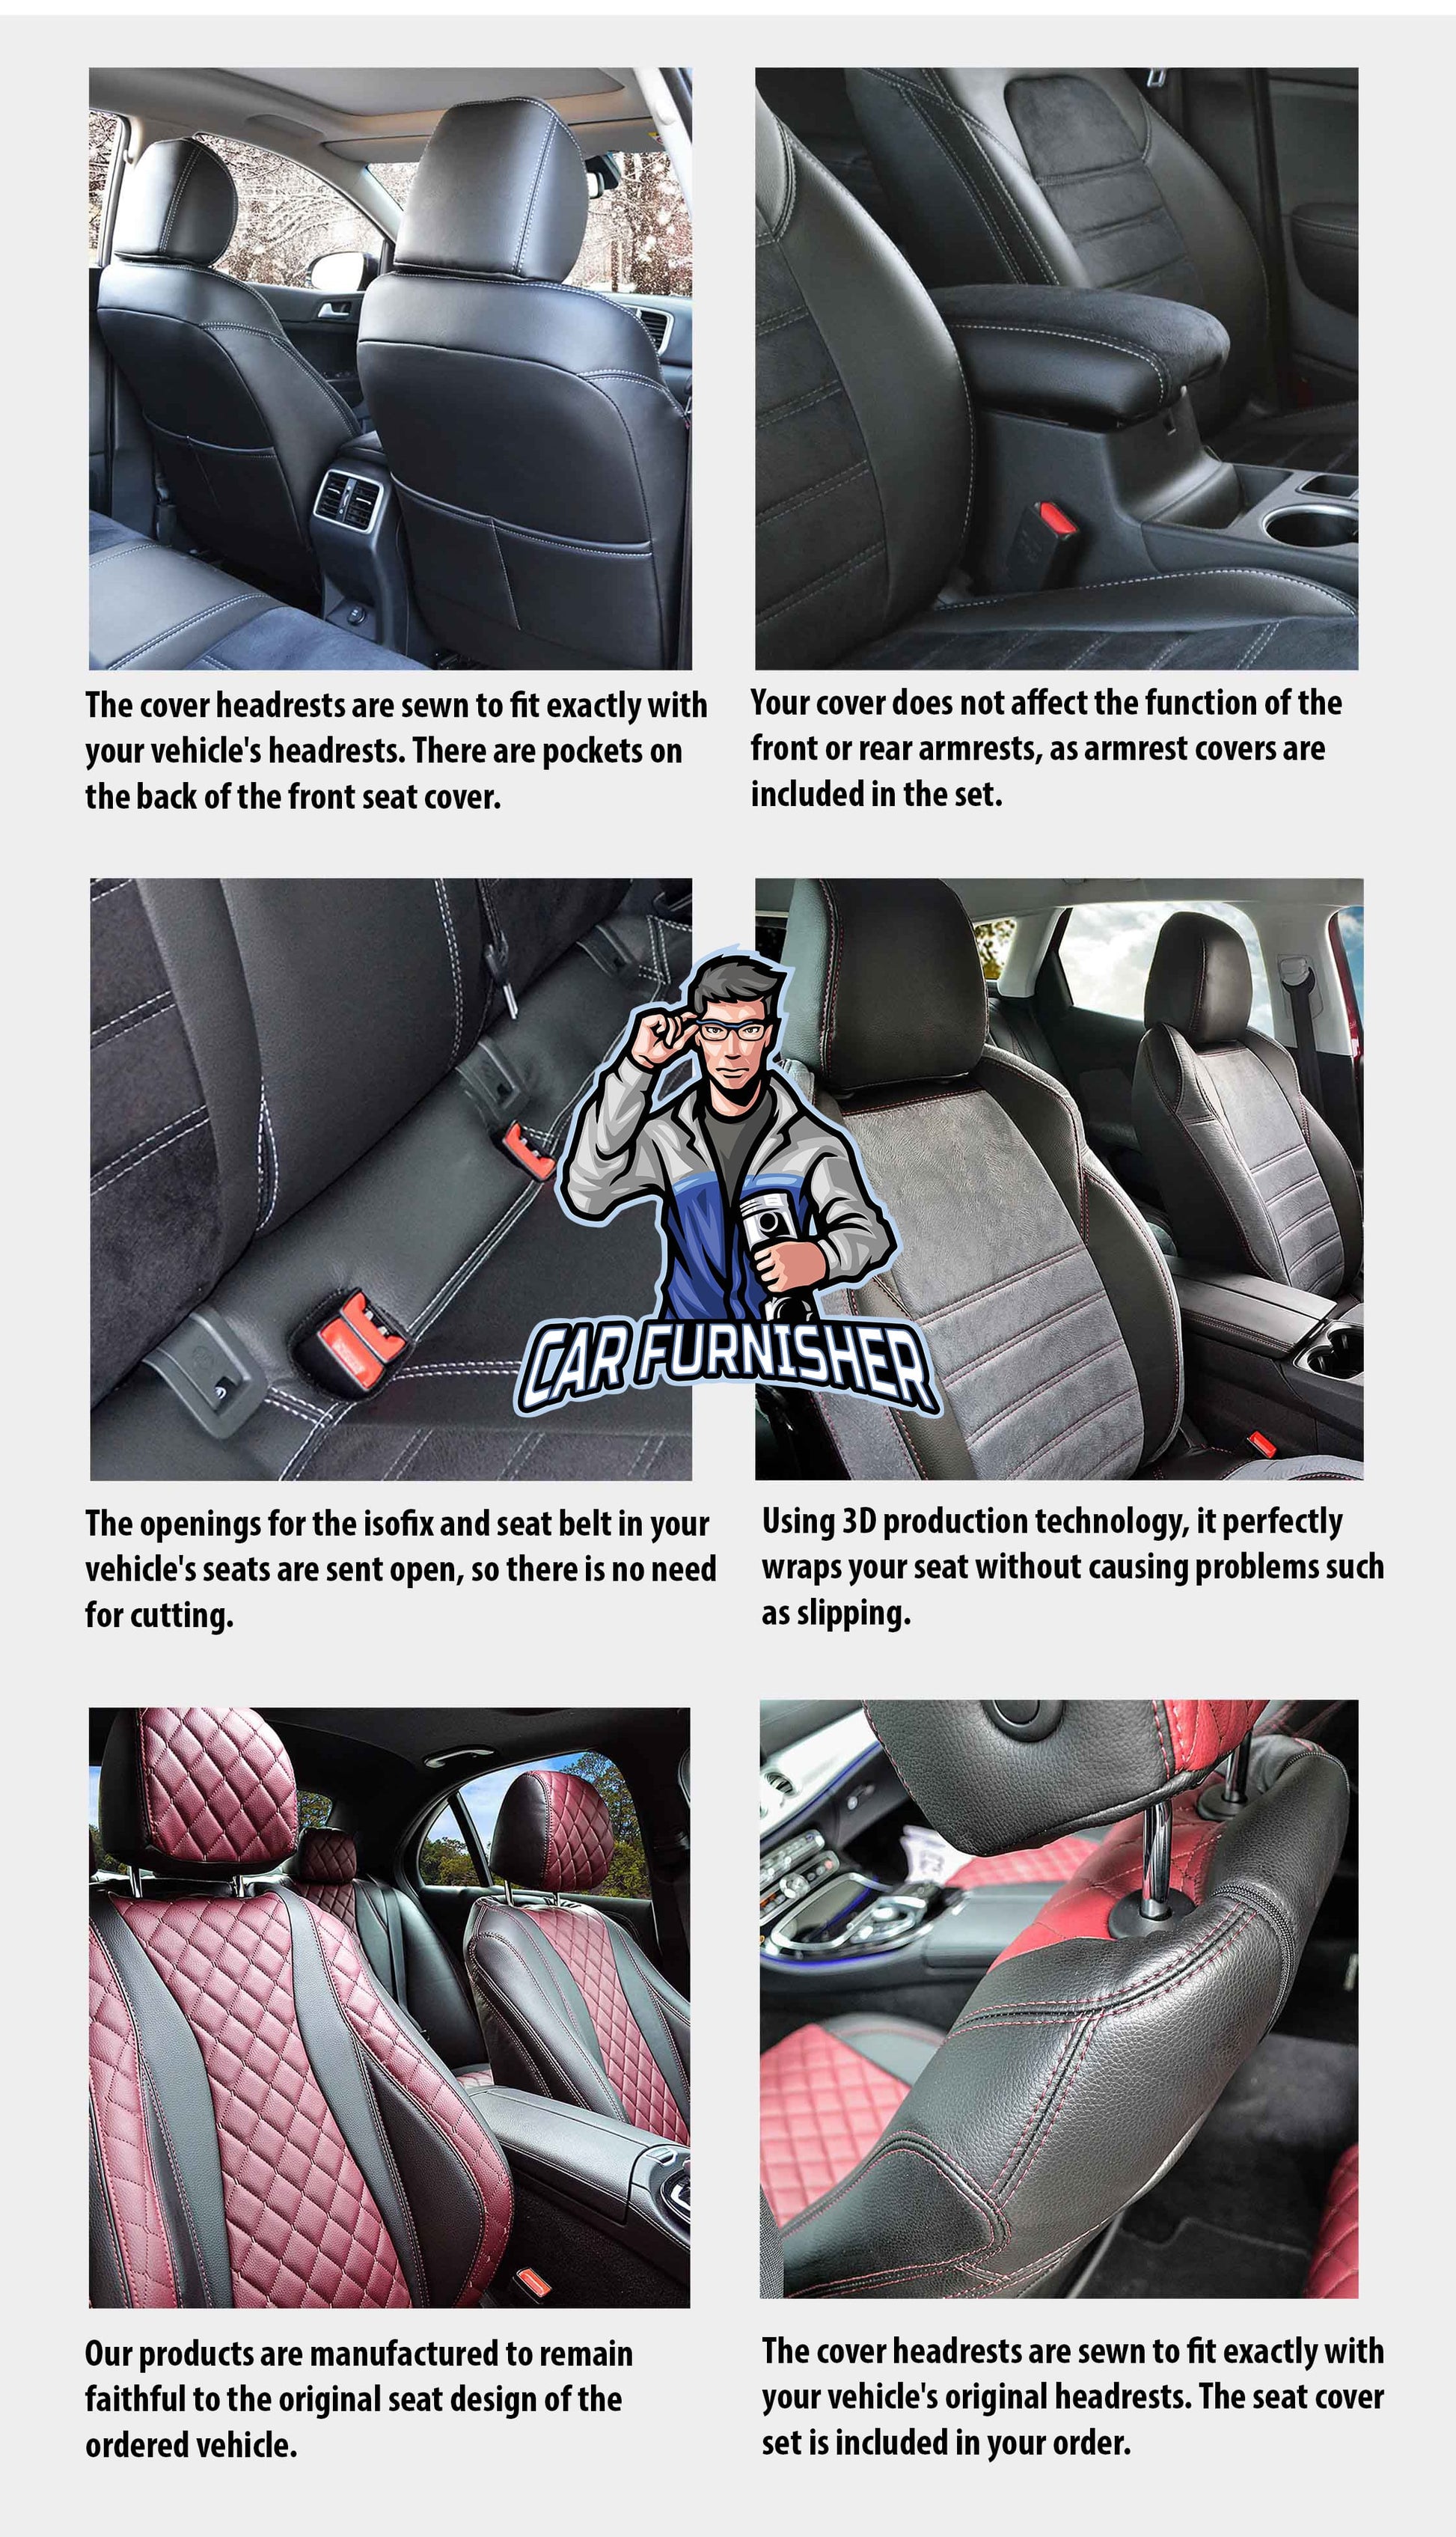 Kia Niro Seat Covers London Foal Feather Design Smoked Leather & Foal Feather